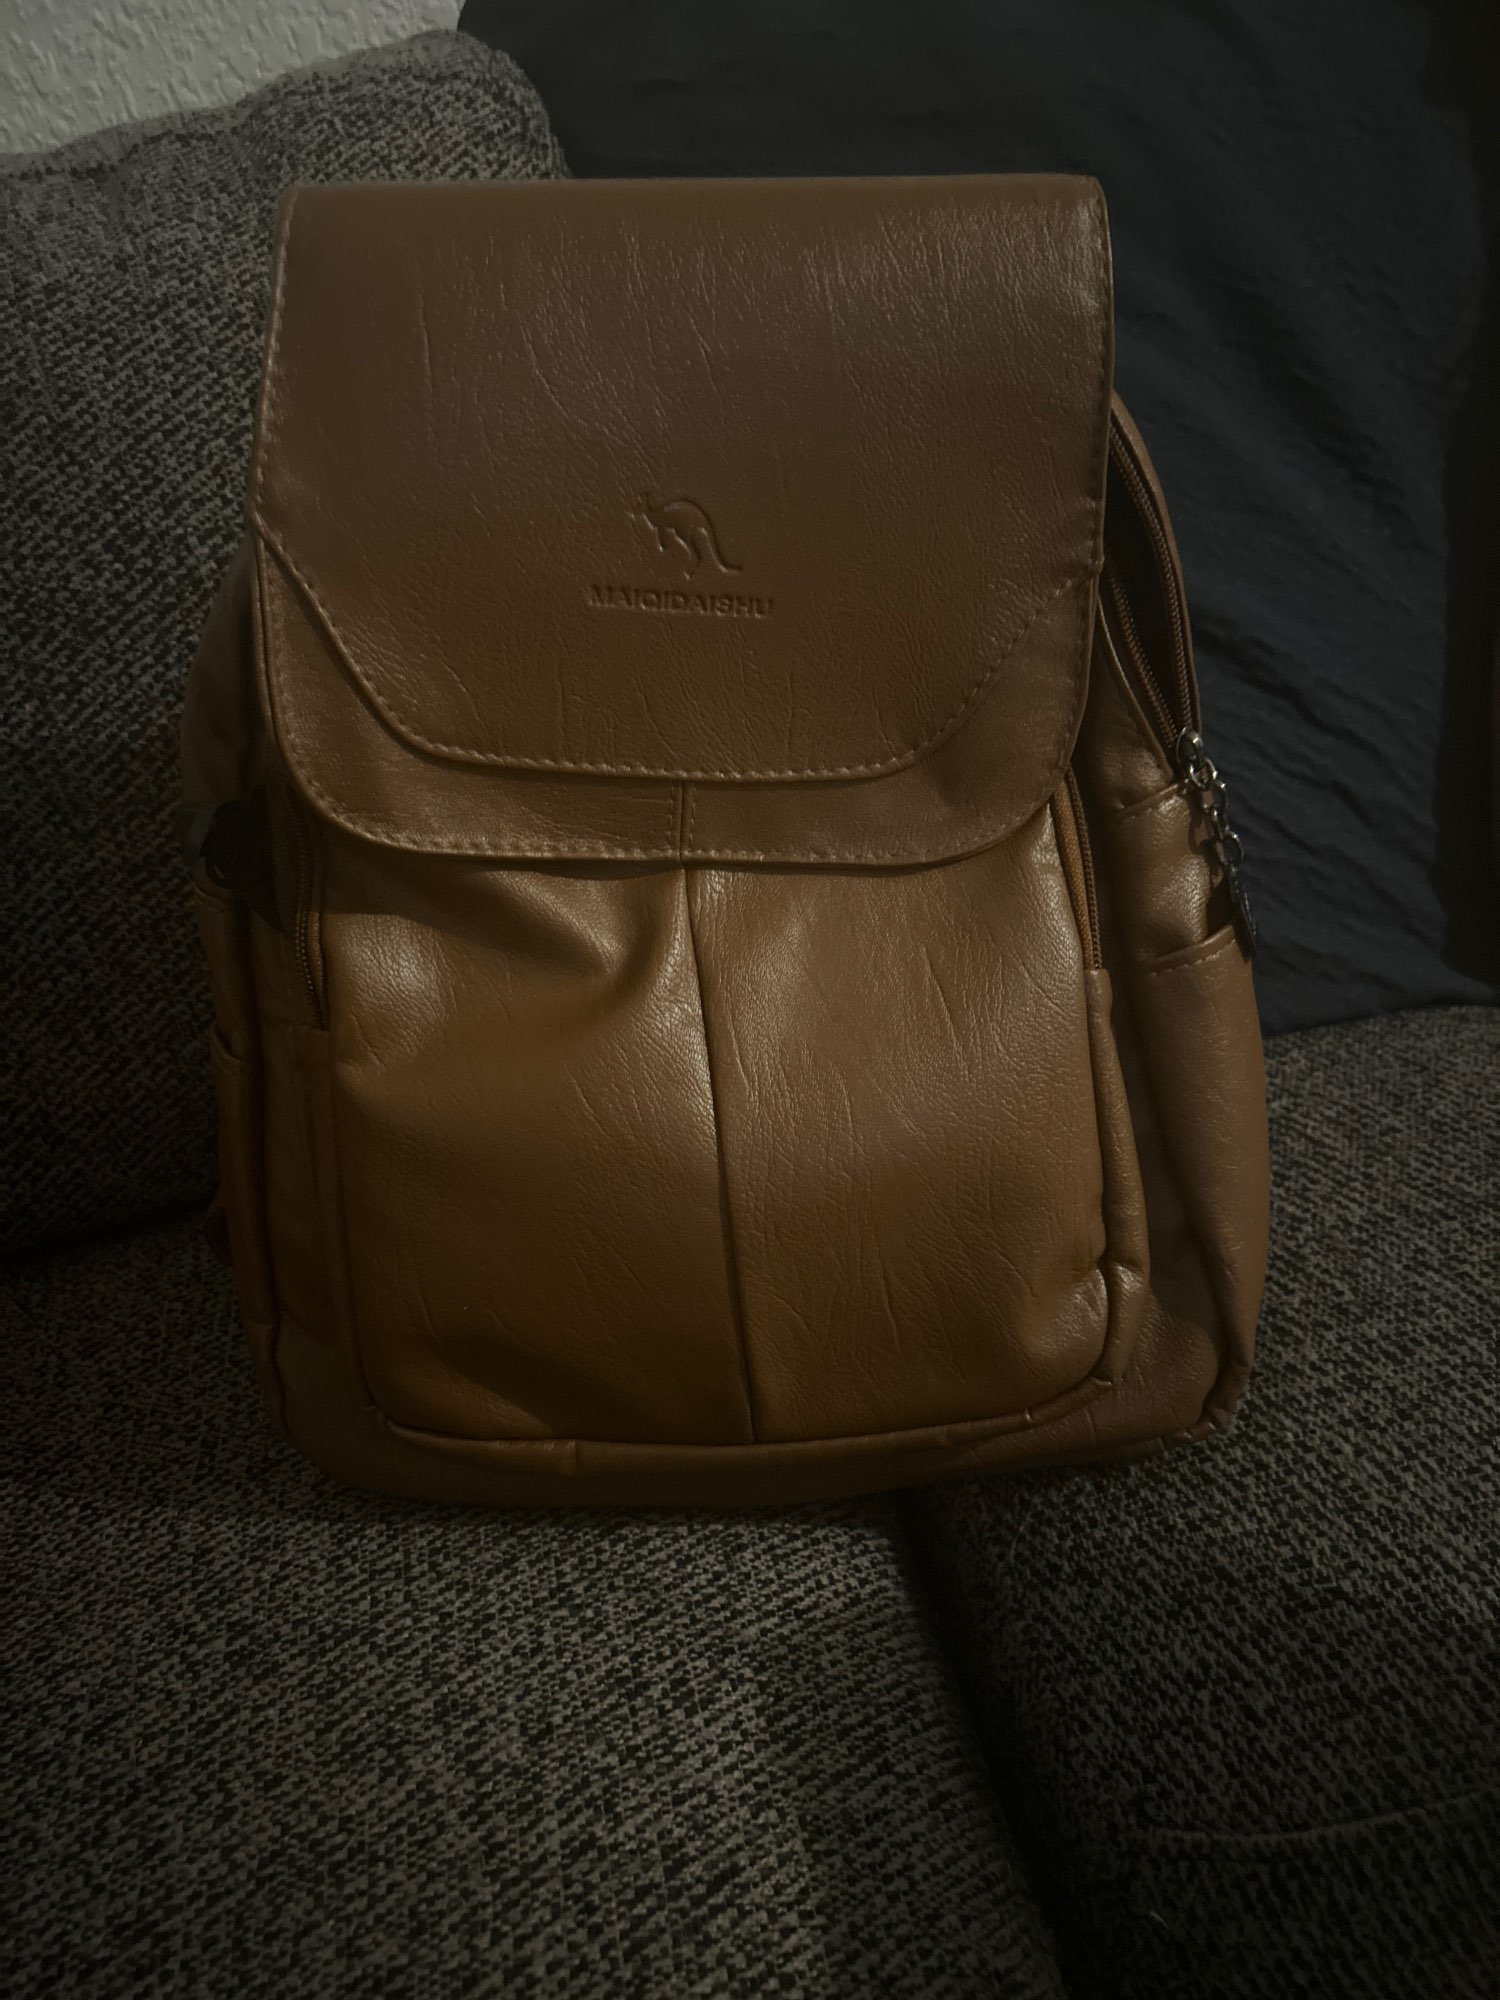 Women's Backpack Travel Large Capacity Shoulder Bag photo review